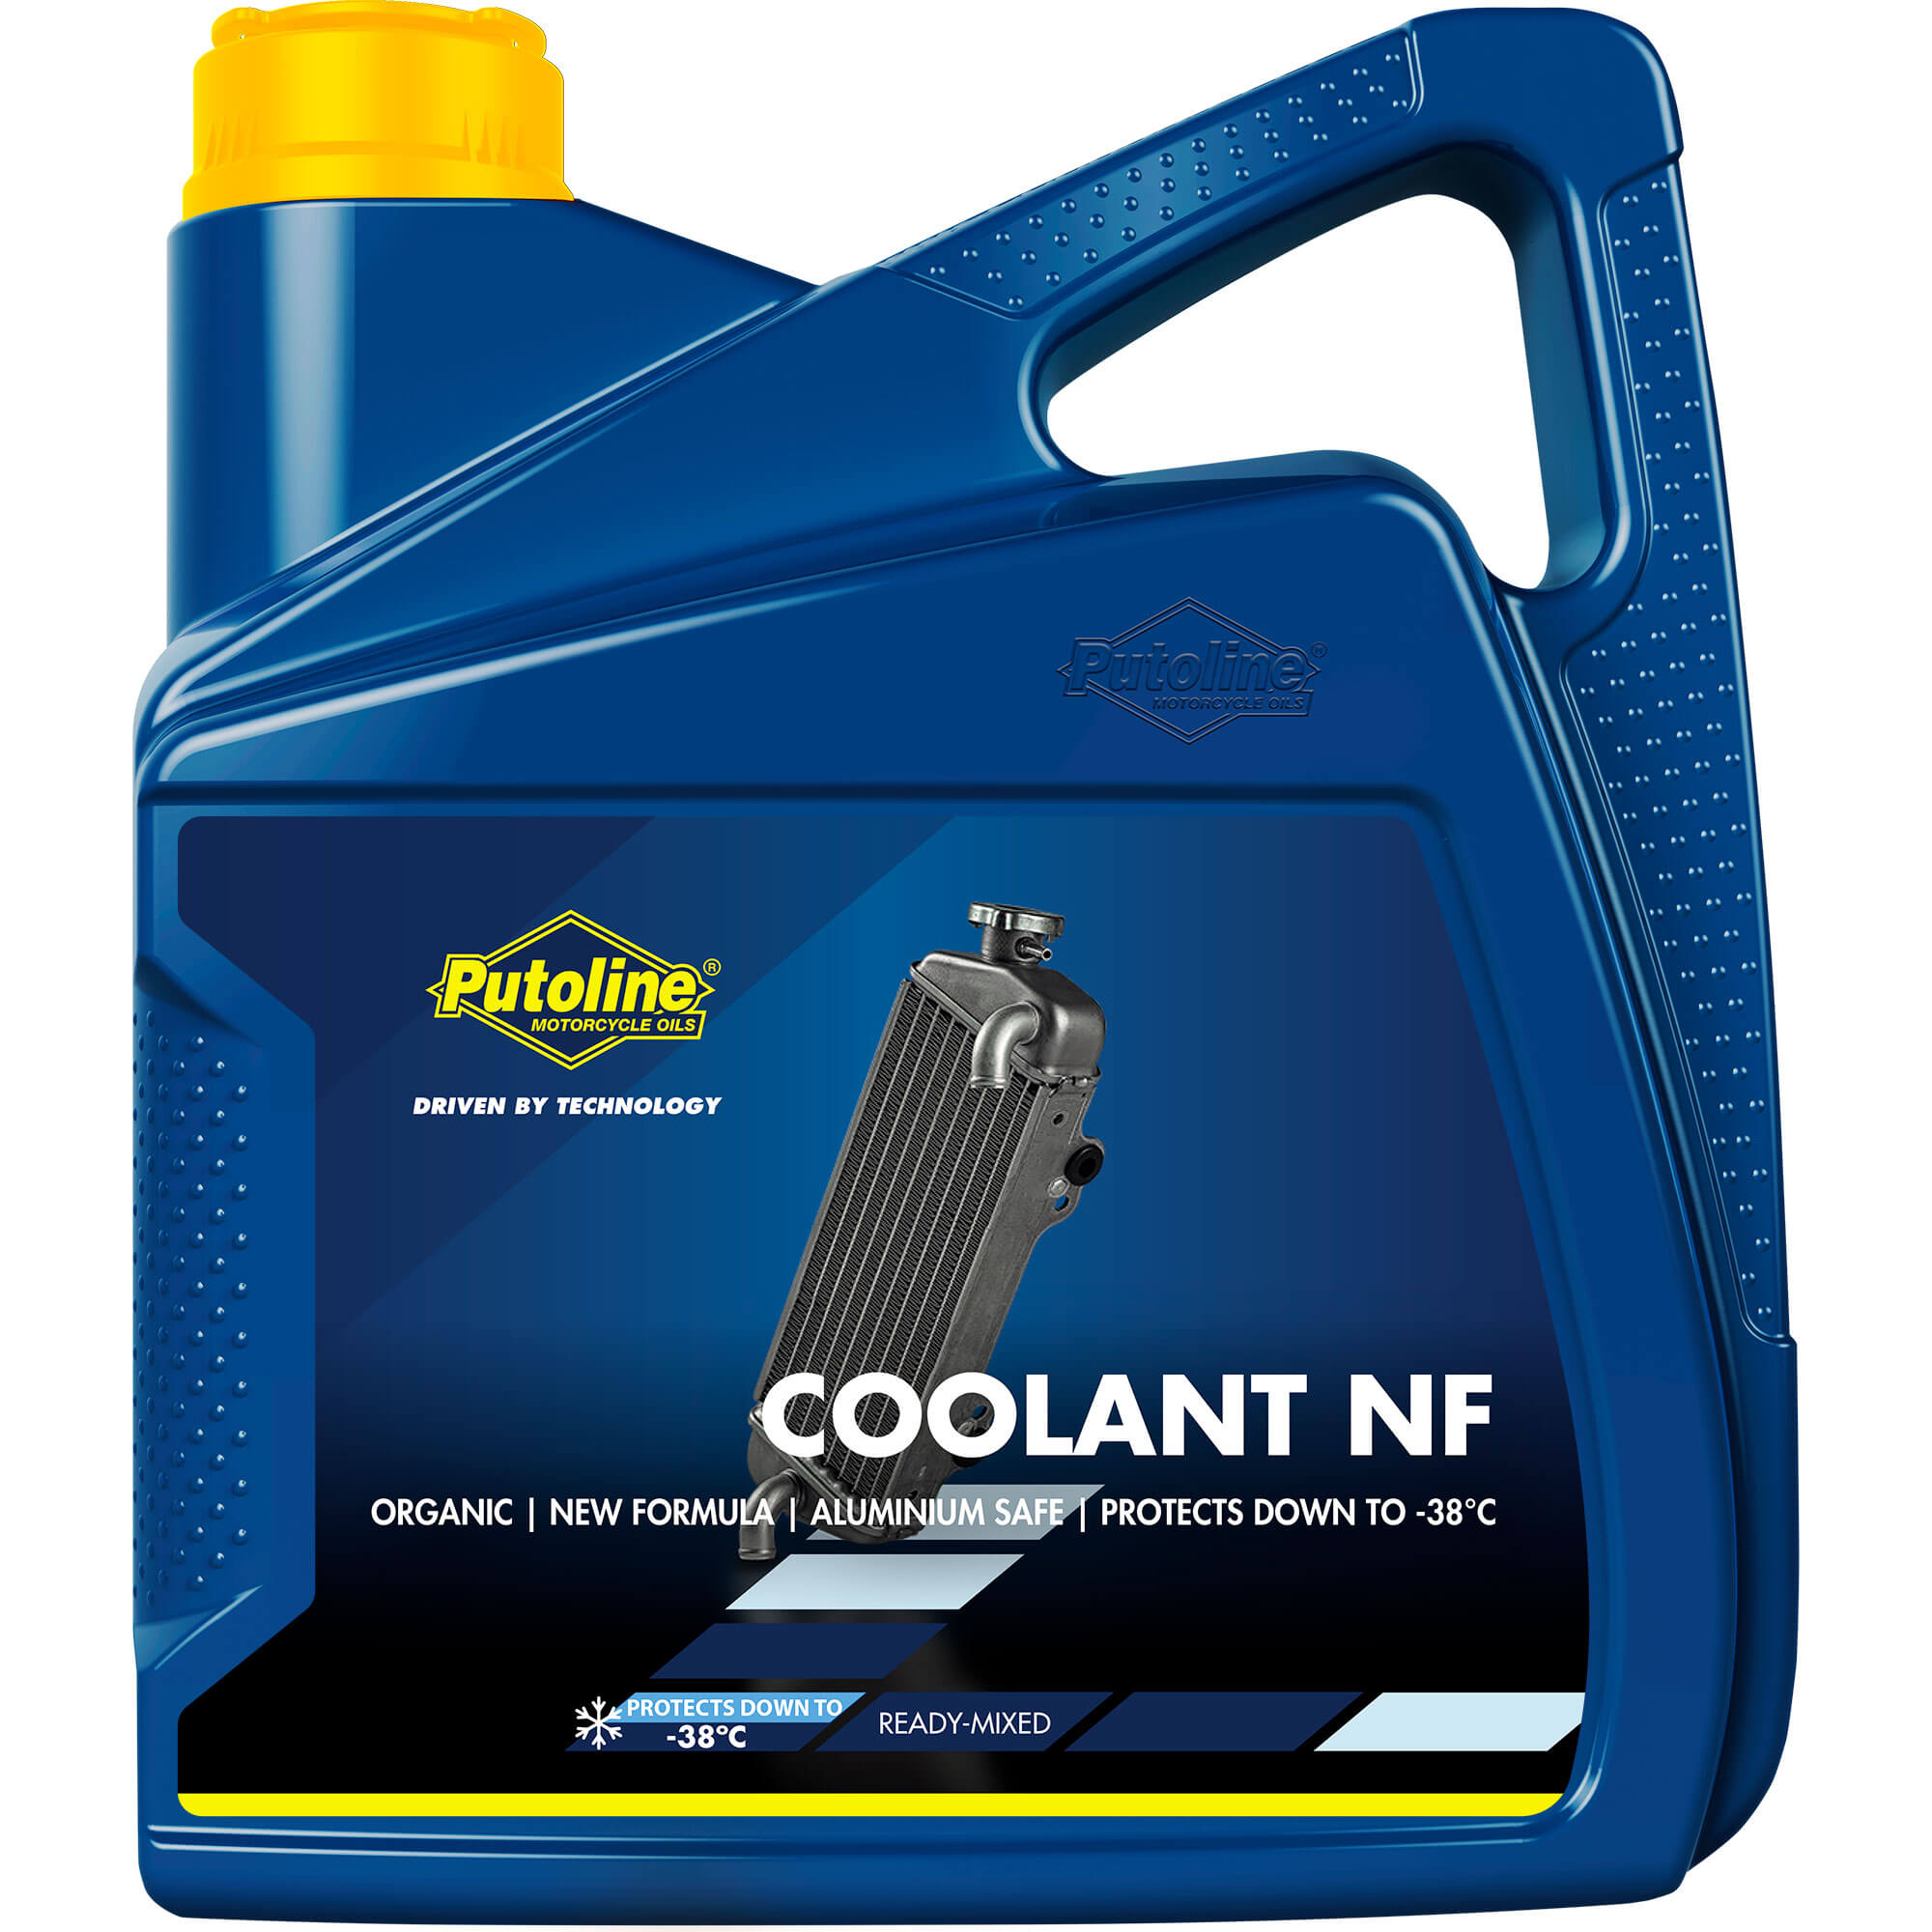 *4L Liquide de refroidissement Putoline Coolant NF 